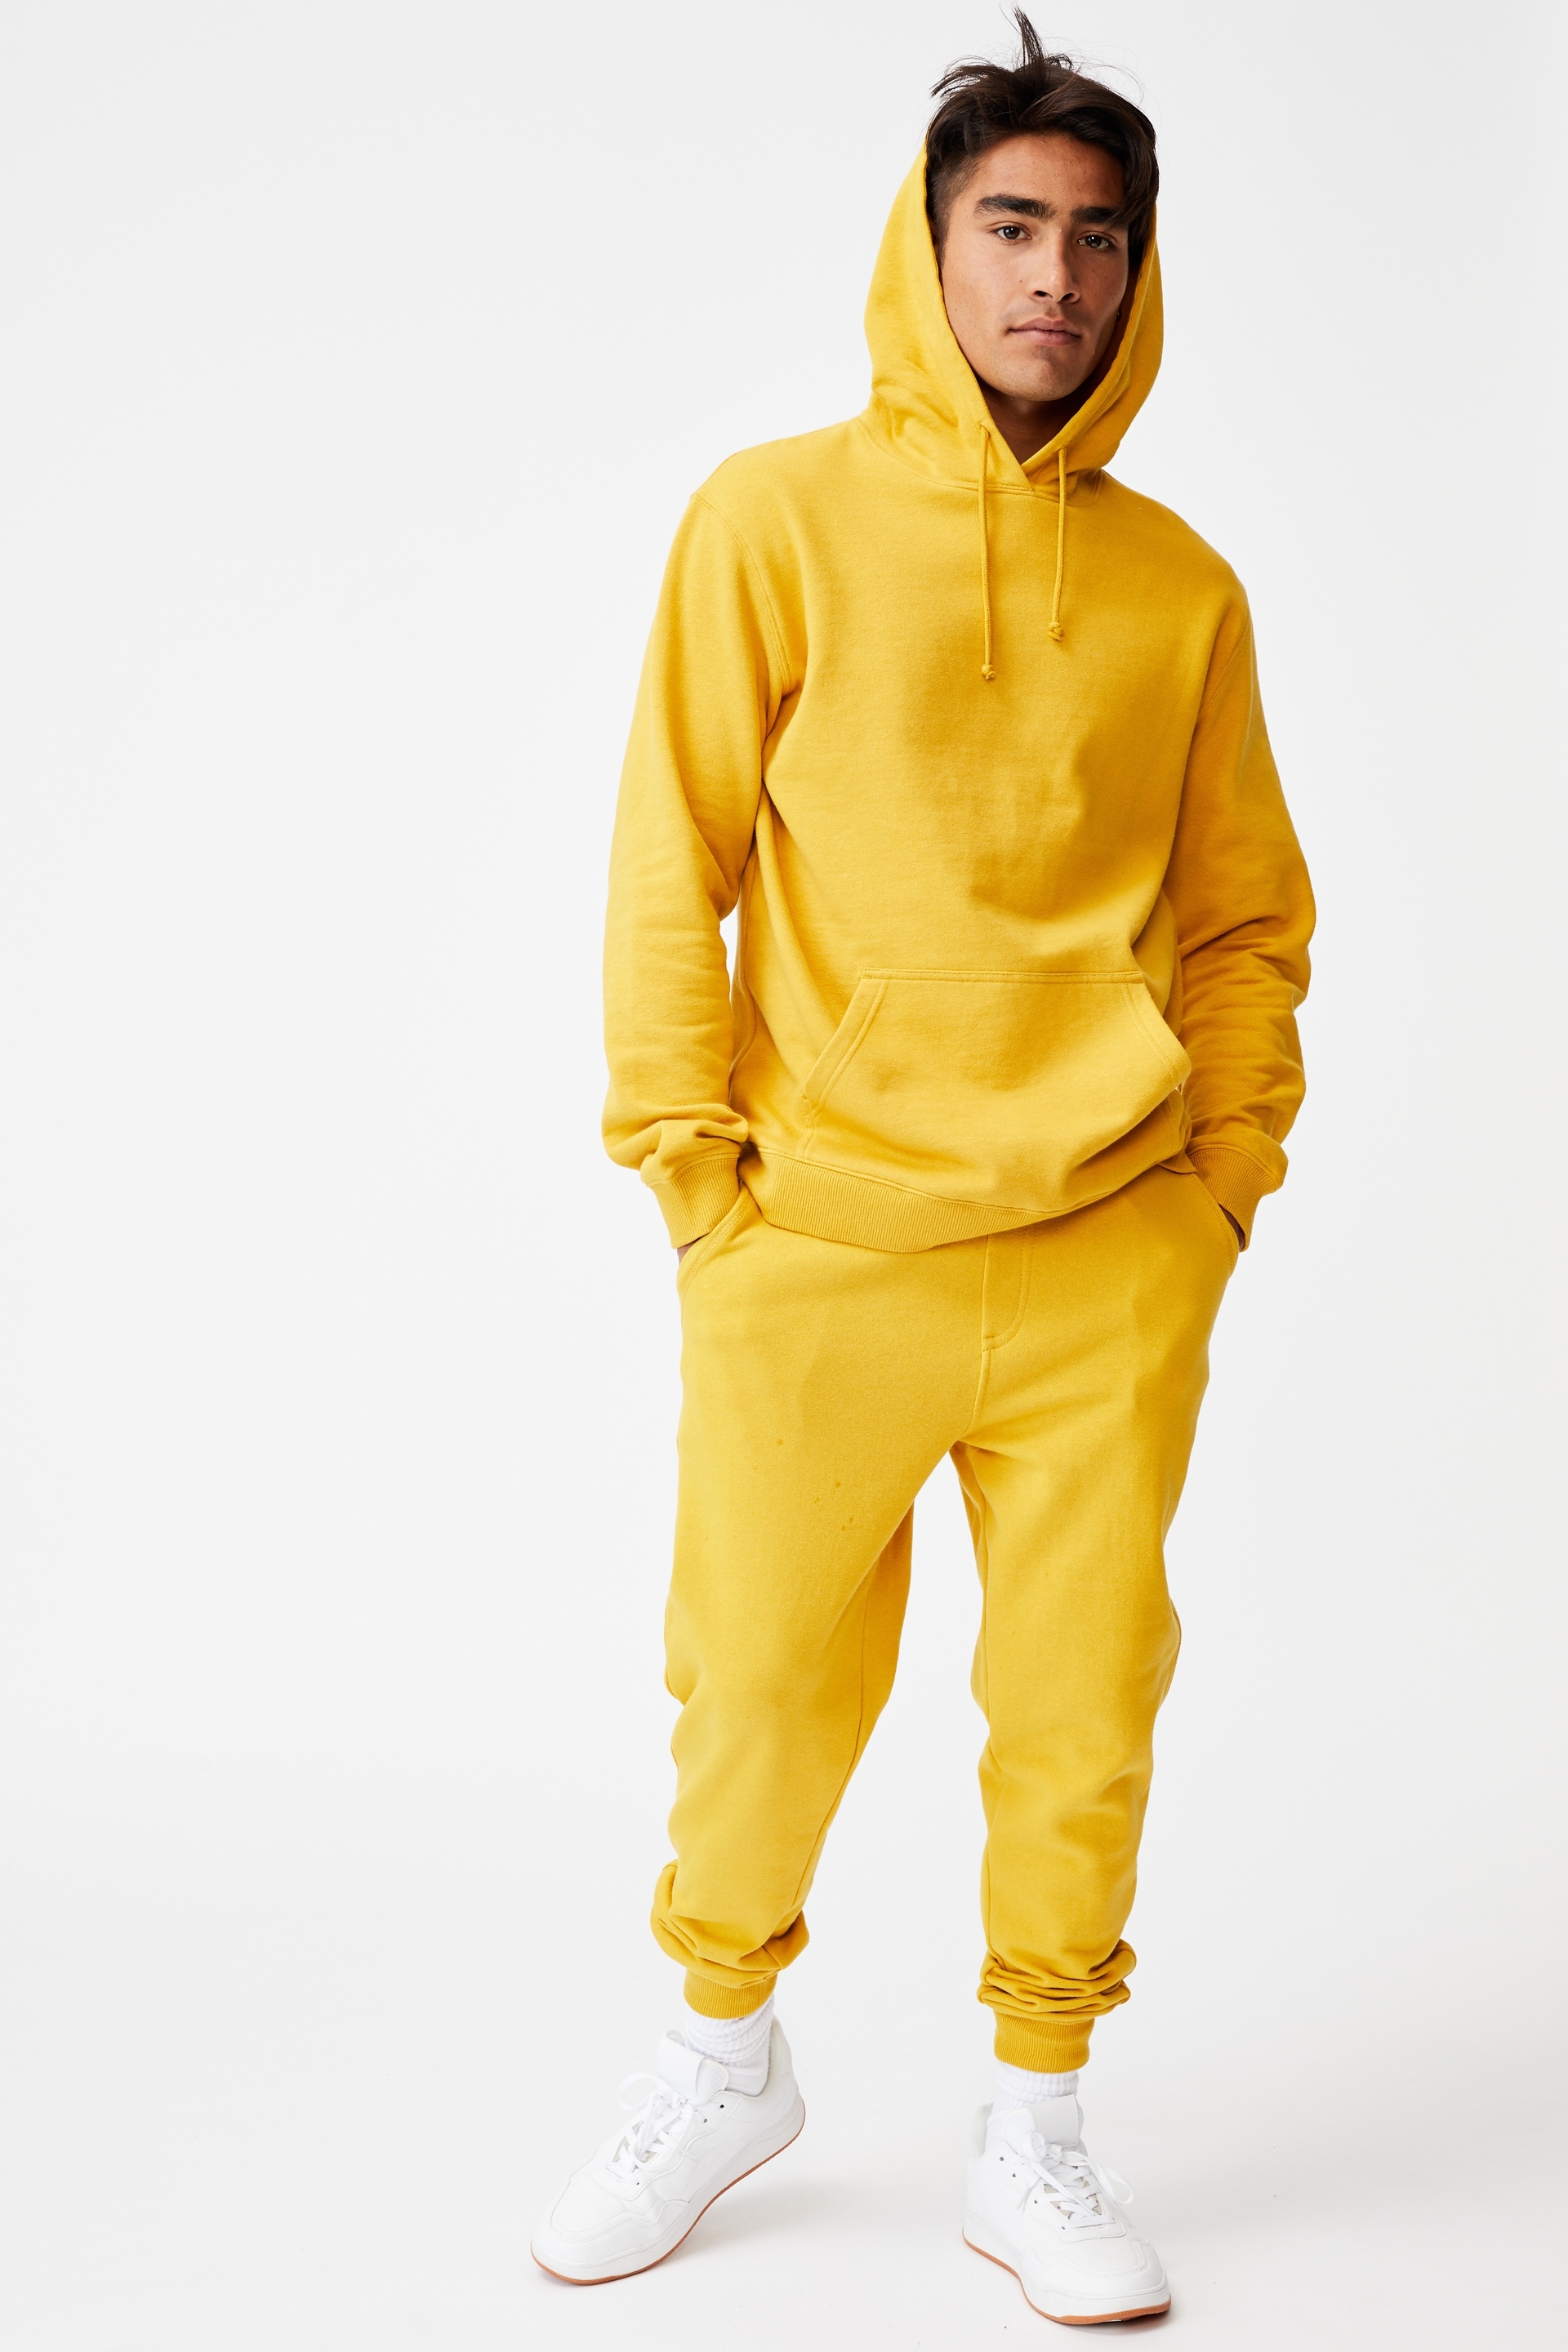 Cotton On Men - Essential Fleece Pullover - Sulphur yellow